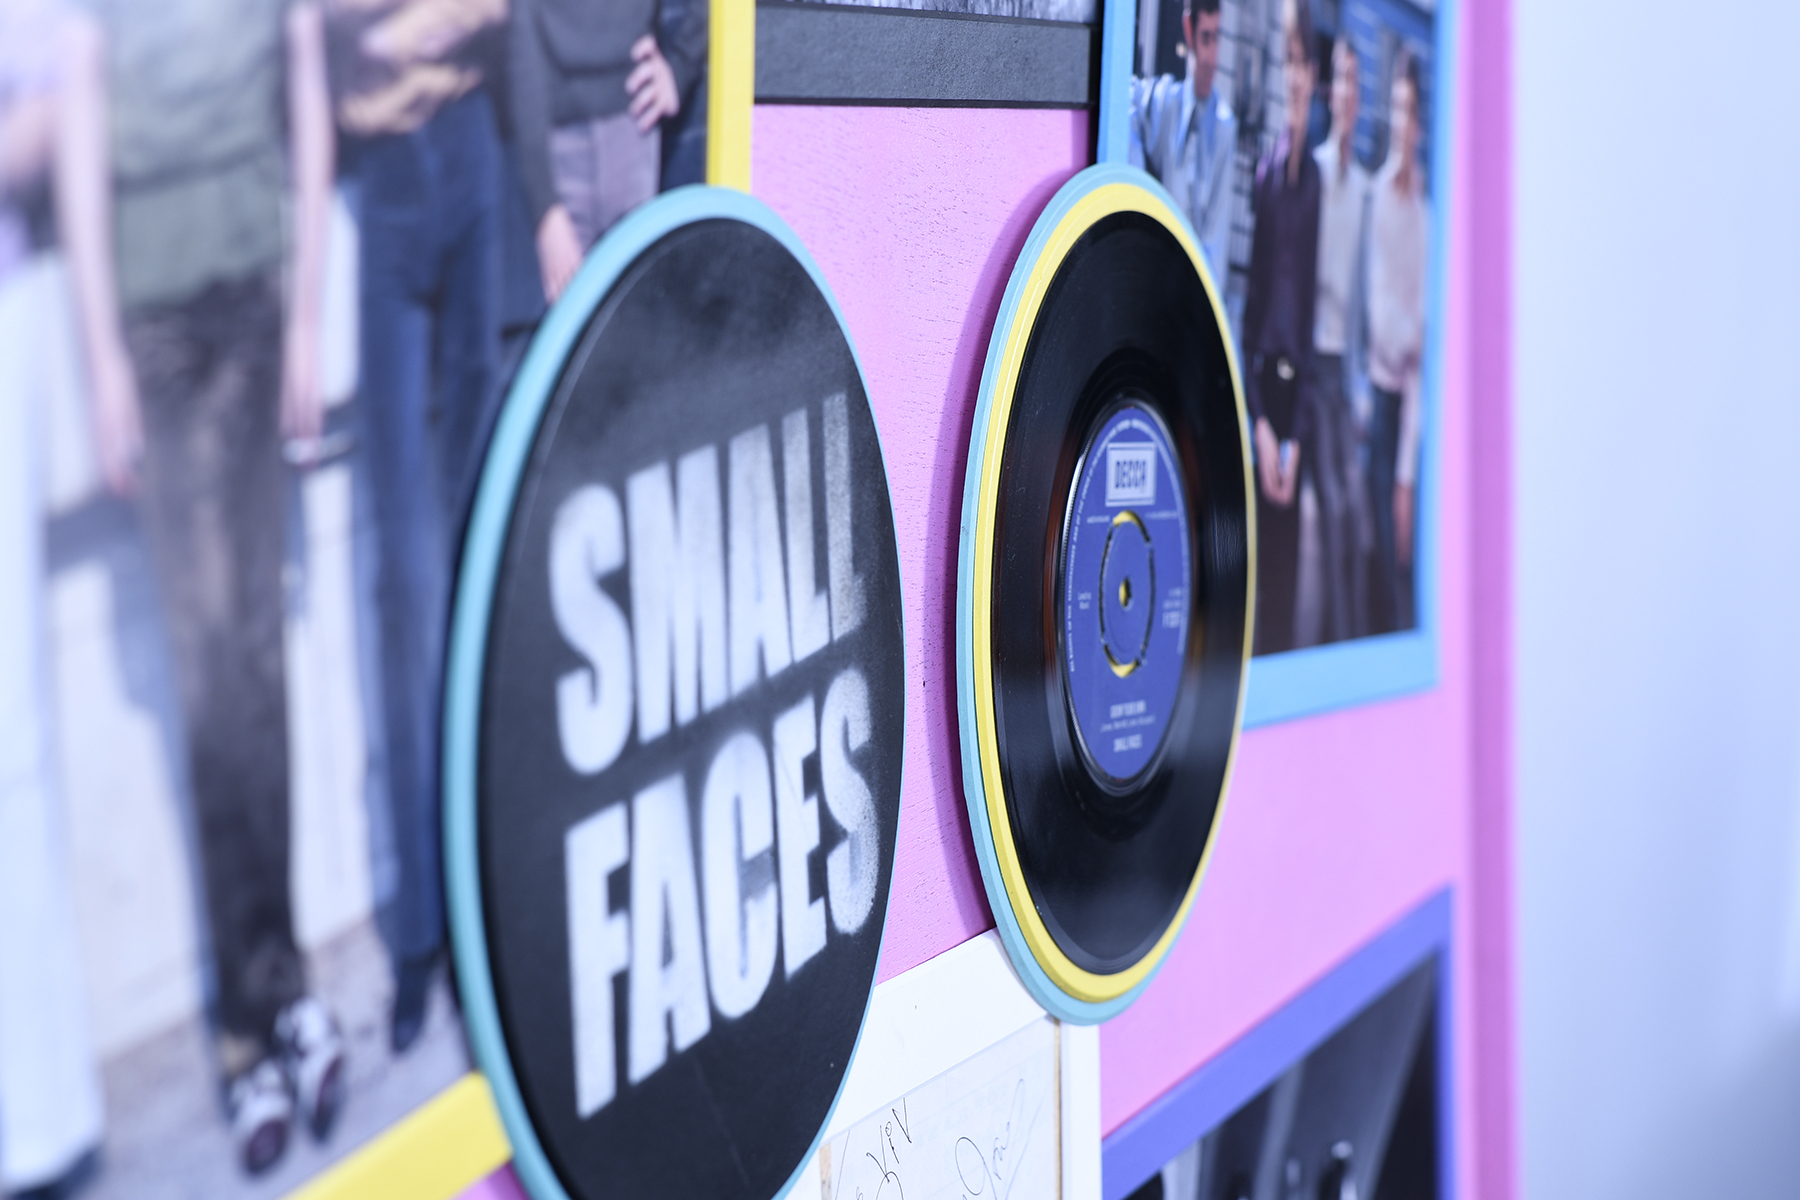 "Small Faces" Unique Artwork Display with Original Signatures - Image 8 of 16